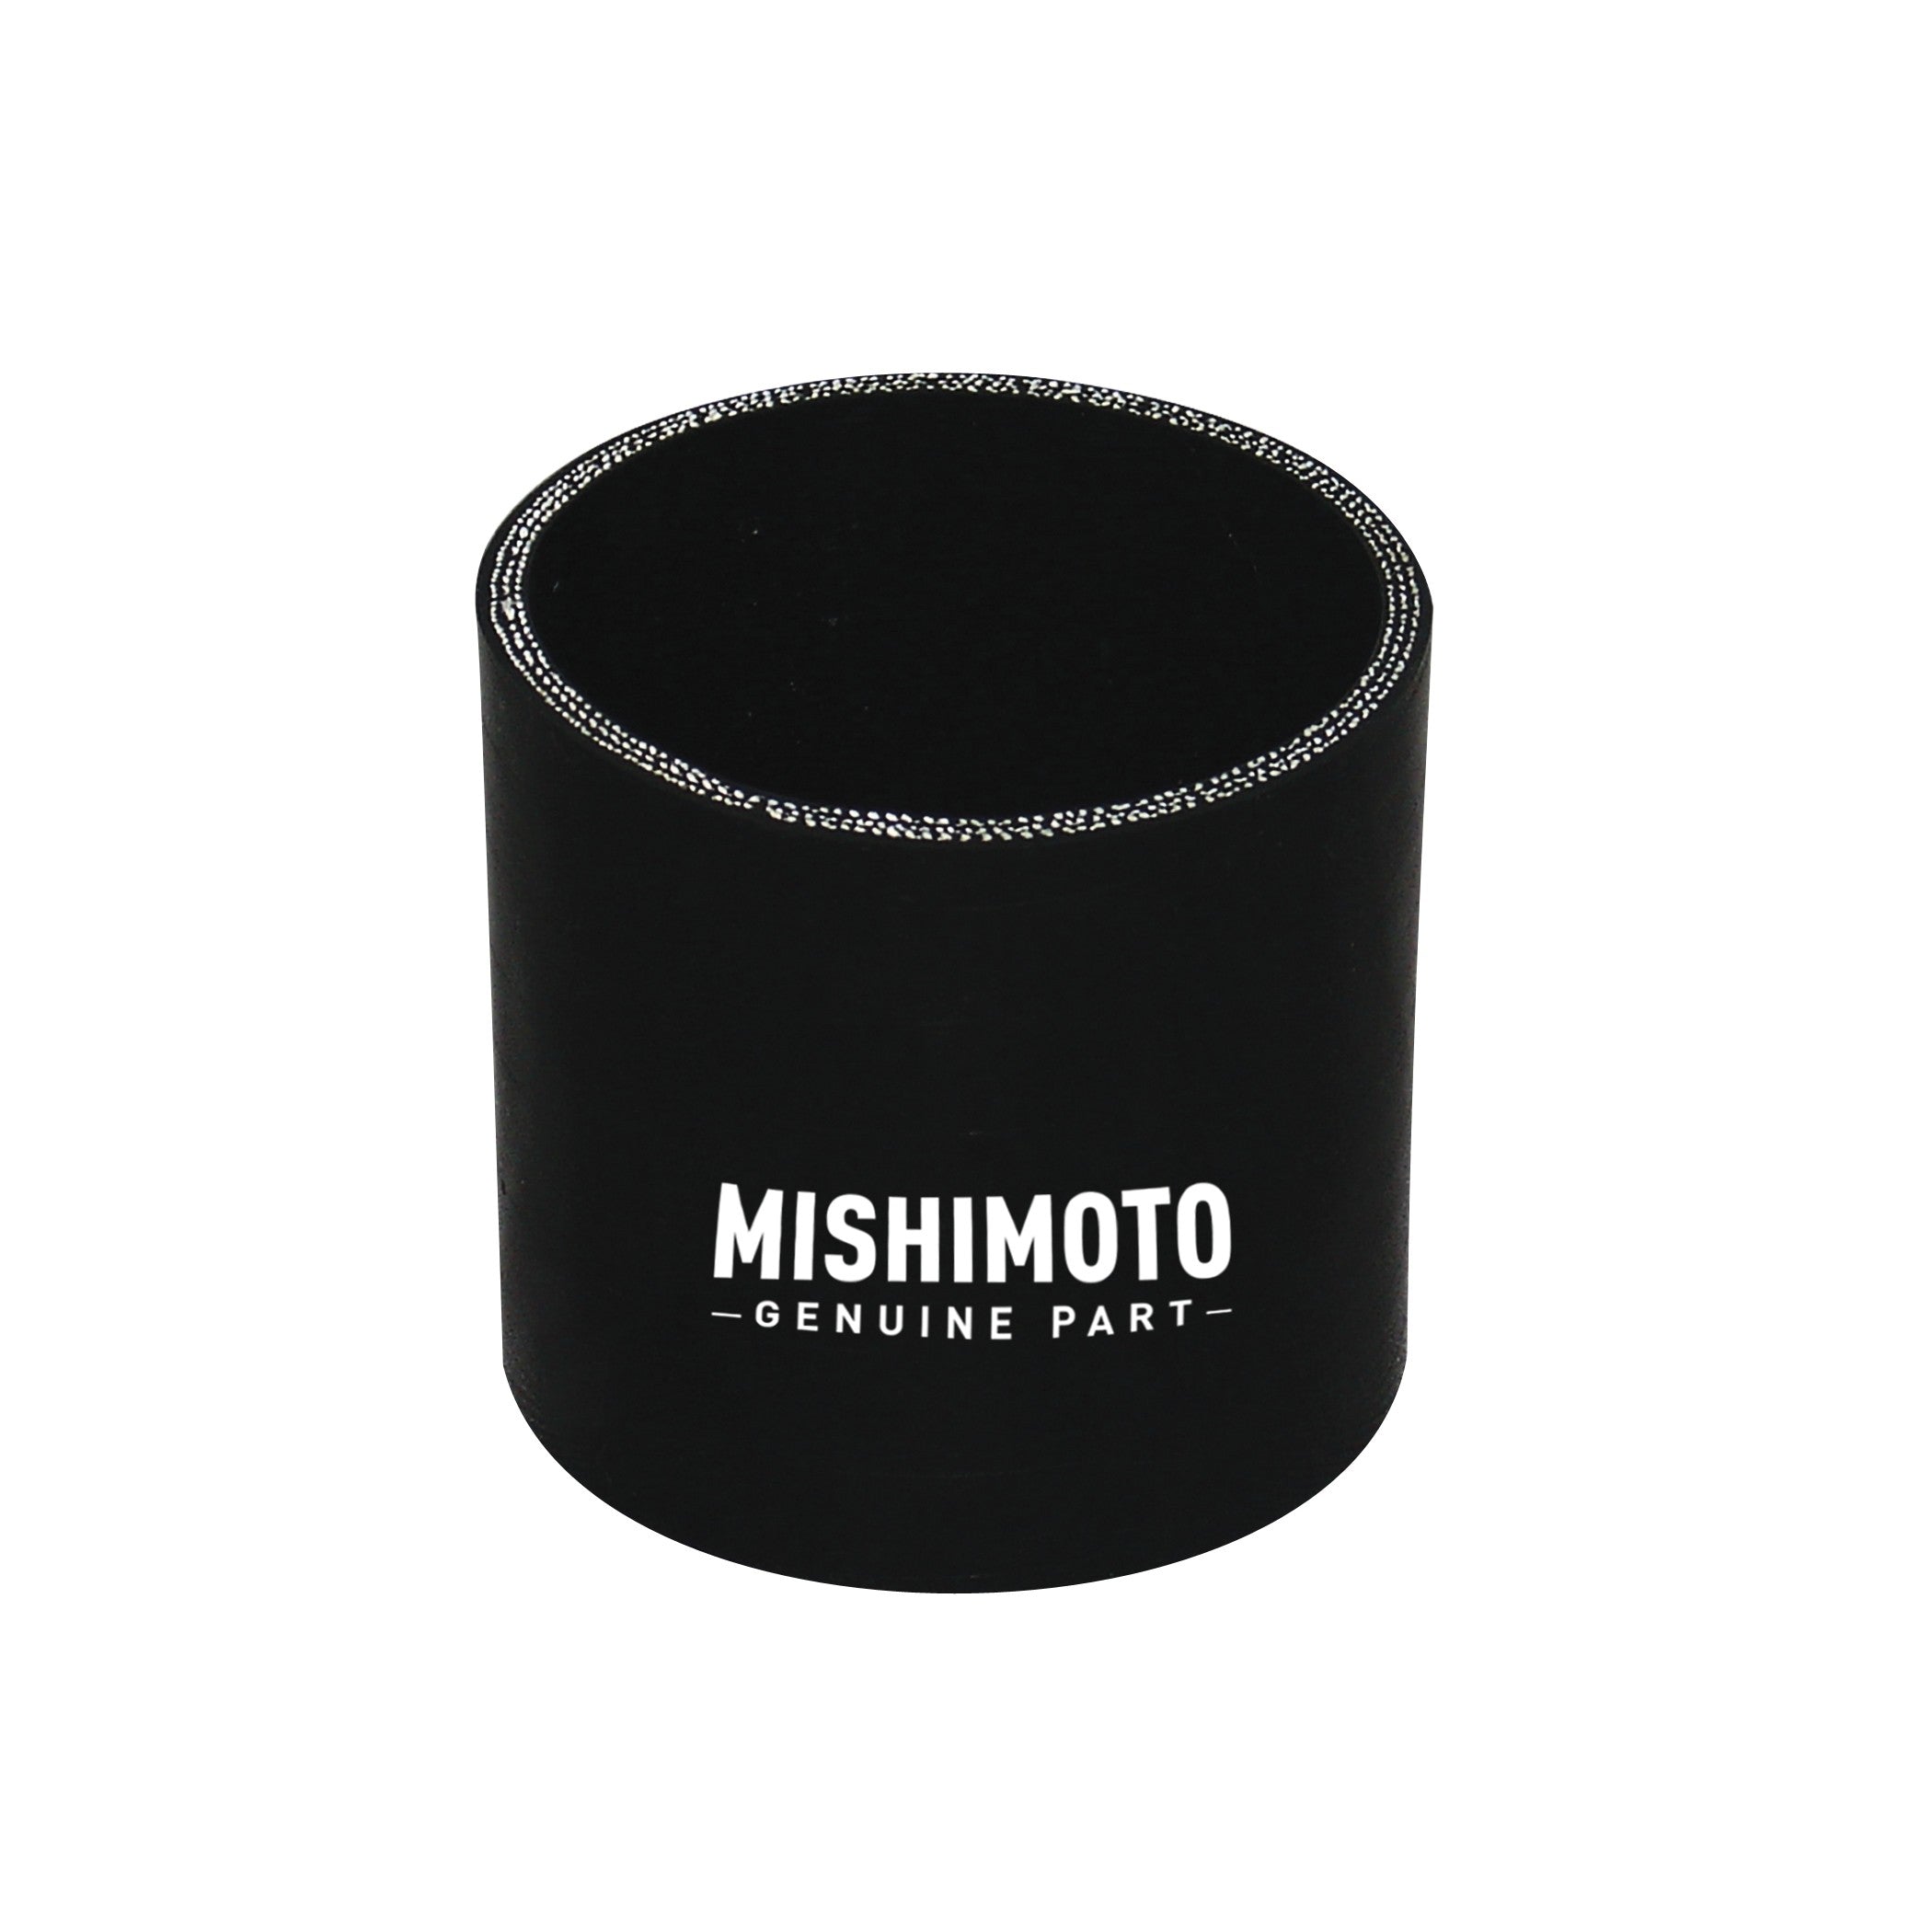 Mishimoto 2.5 Inch Black Straight Coupler